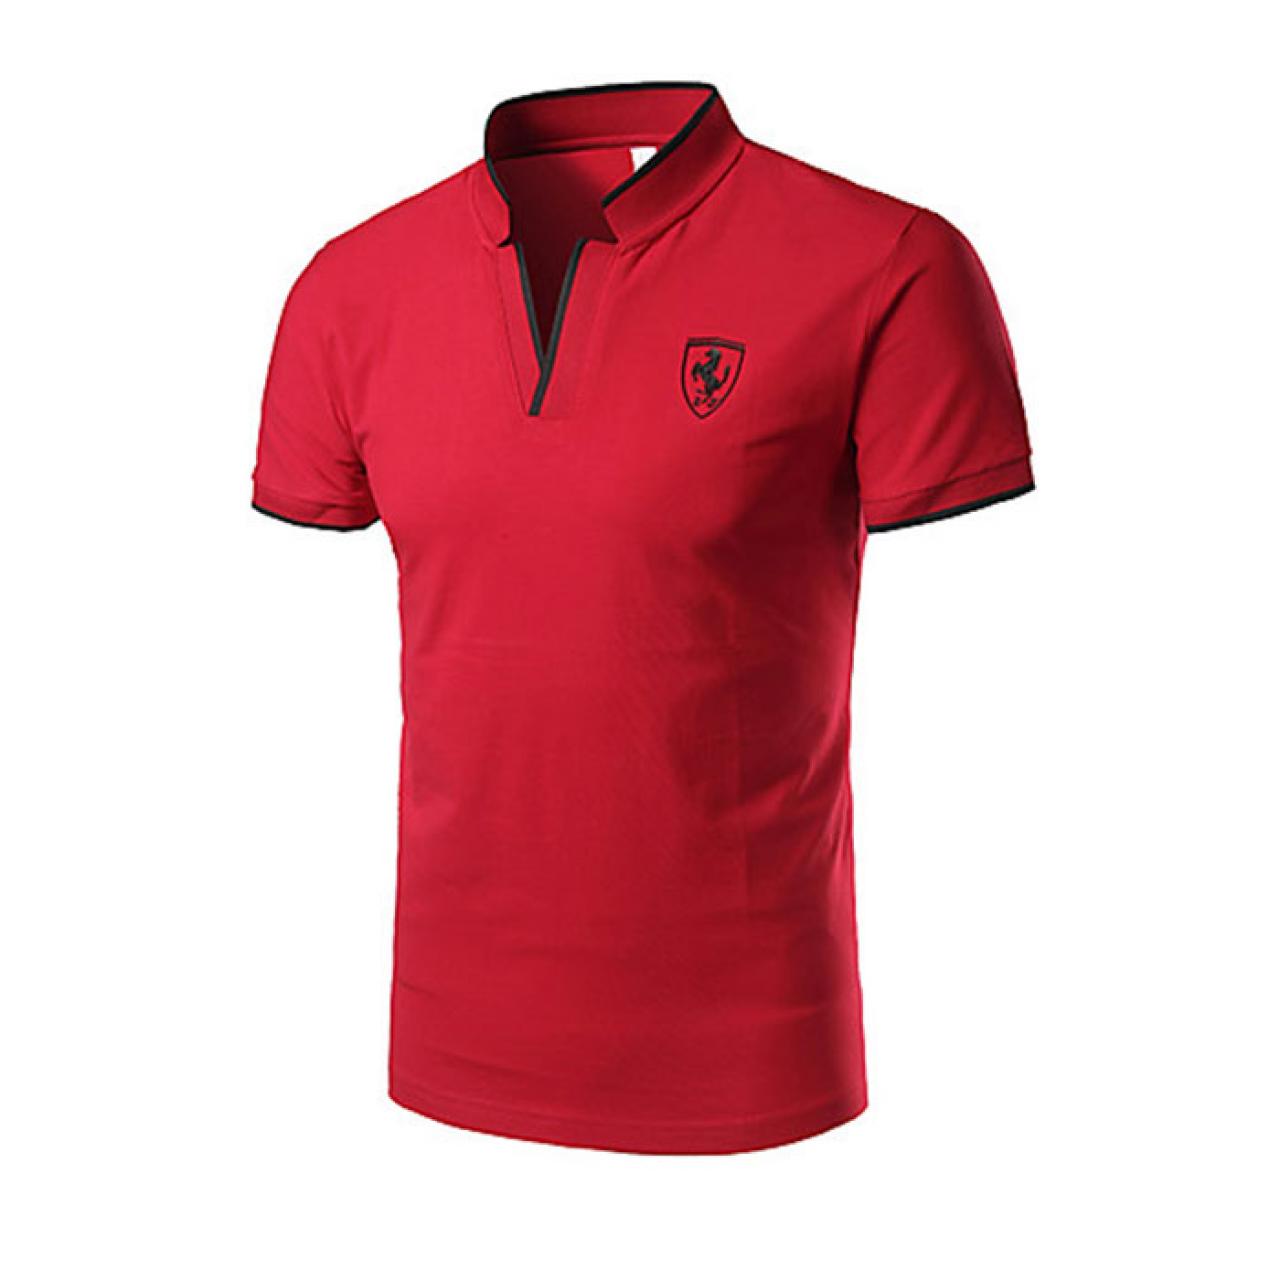 New Short Sleeve Sub Collar Mens Red T Shirt